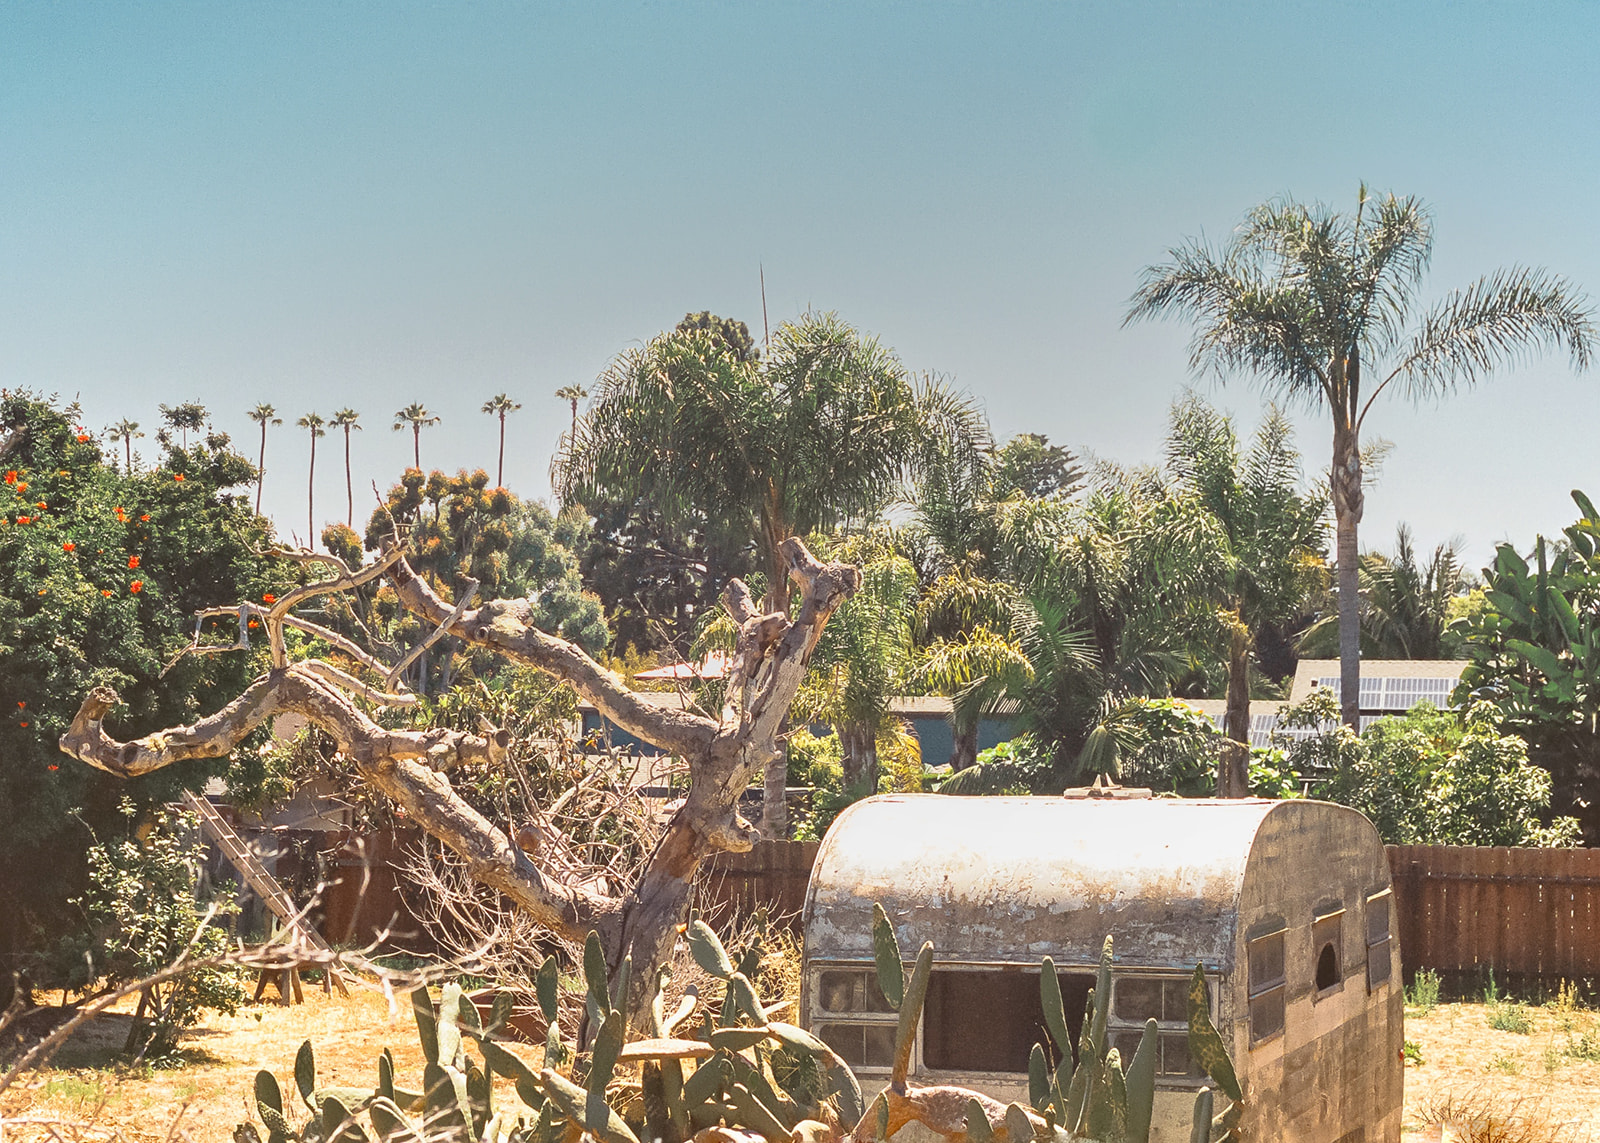 San Diego Zoo on 35 mm film photography